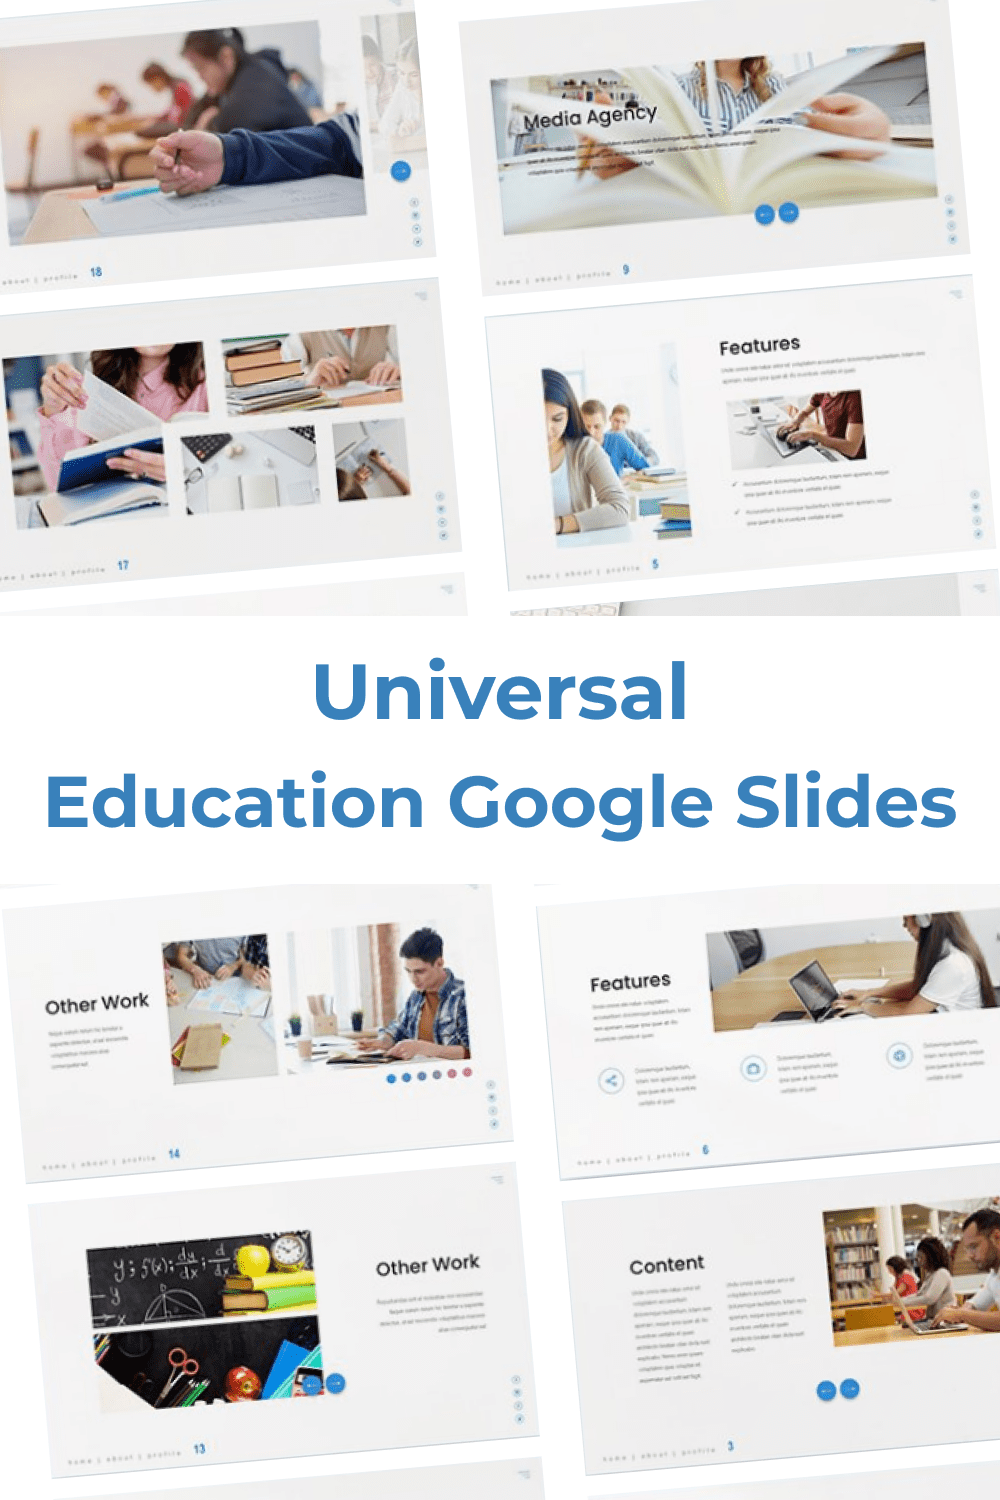 Universal - Education Google Slides Pinterest.